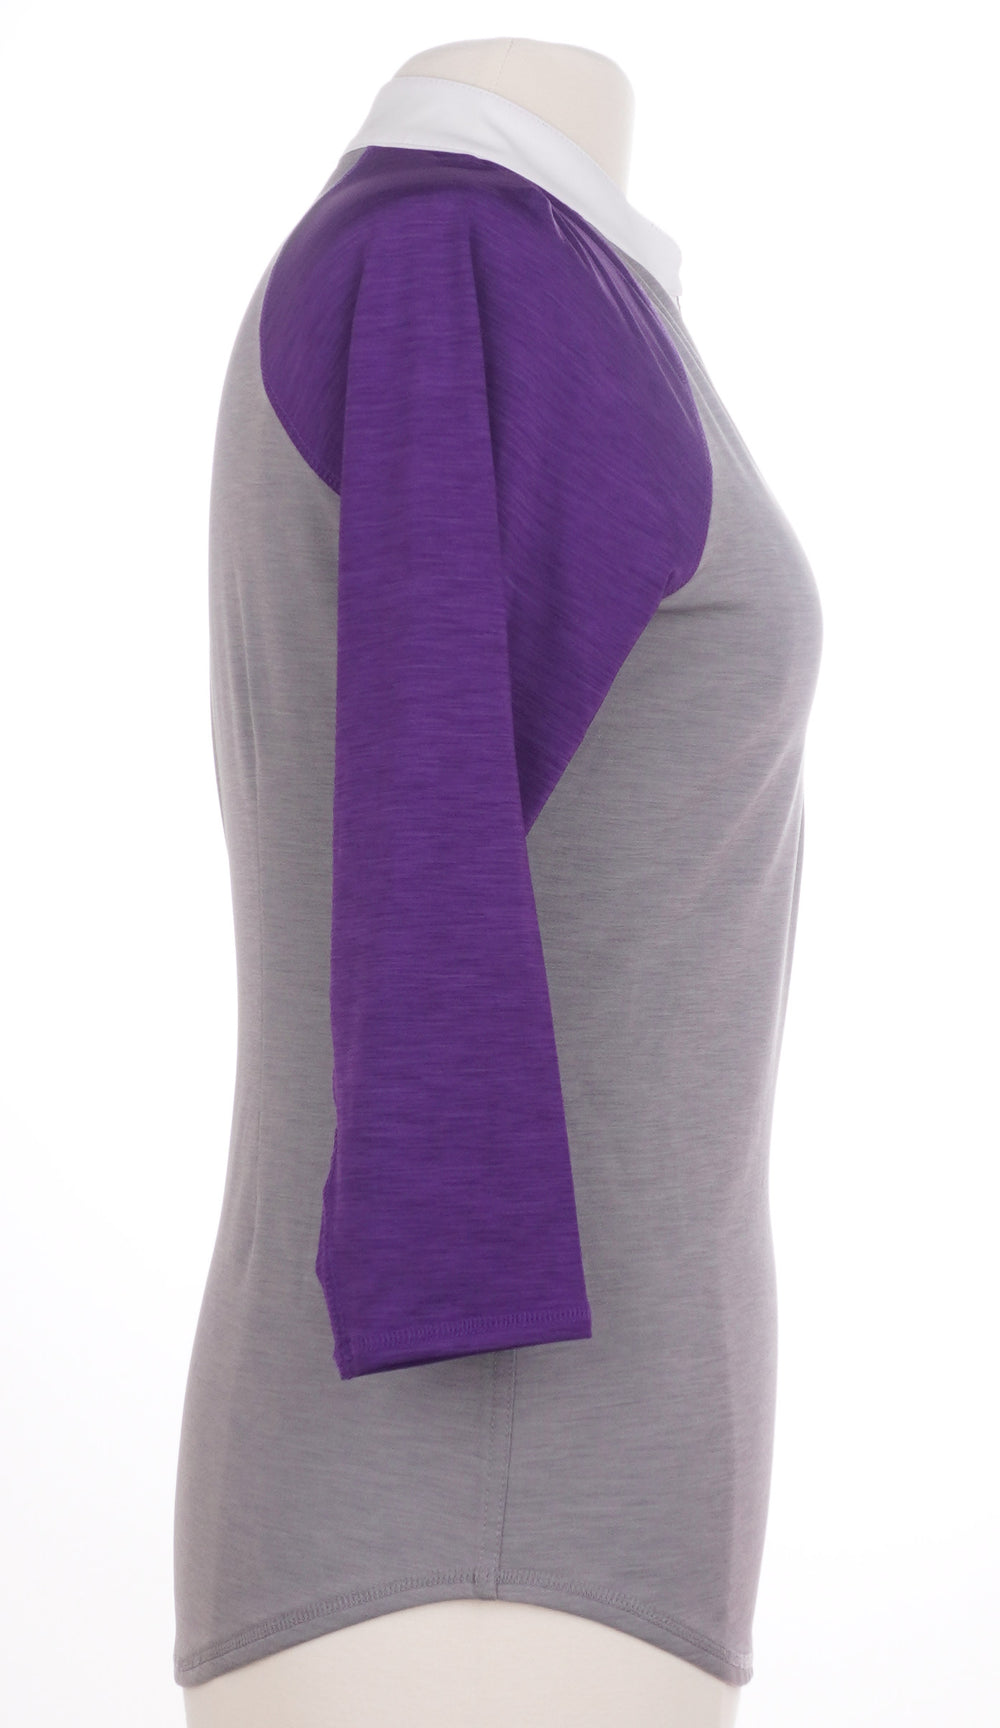 Jofit Baseball Tee Long Sleeve - Grey/Purple - Size Small - Skorzie